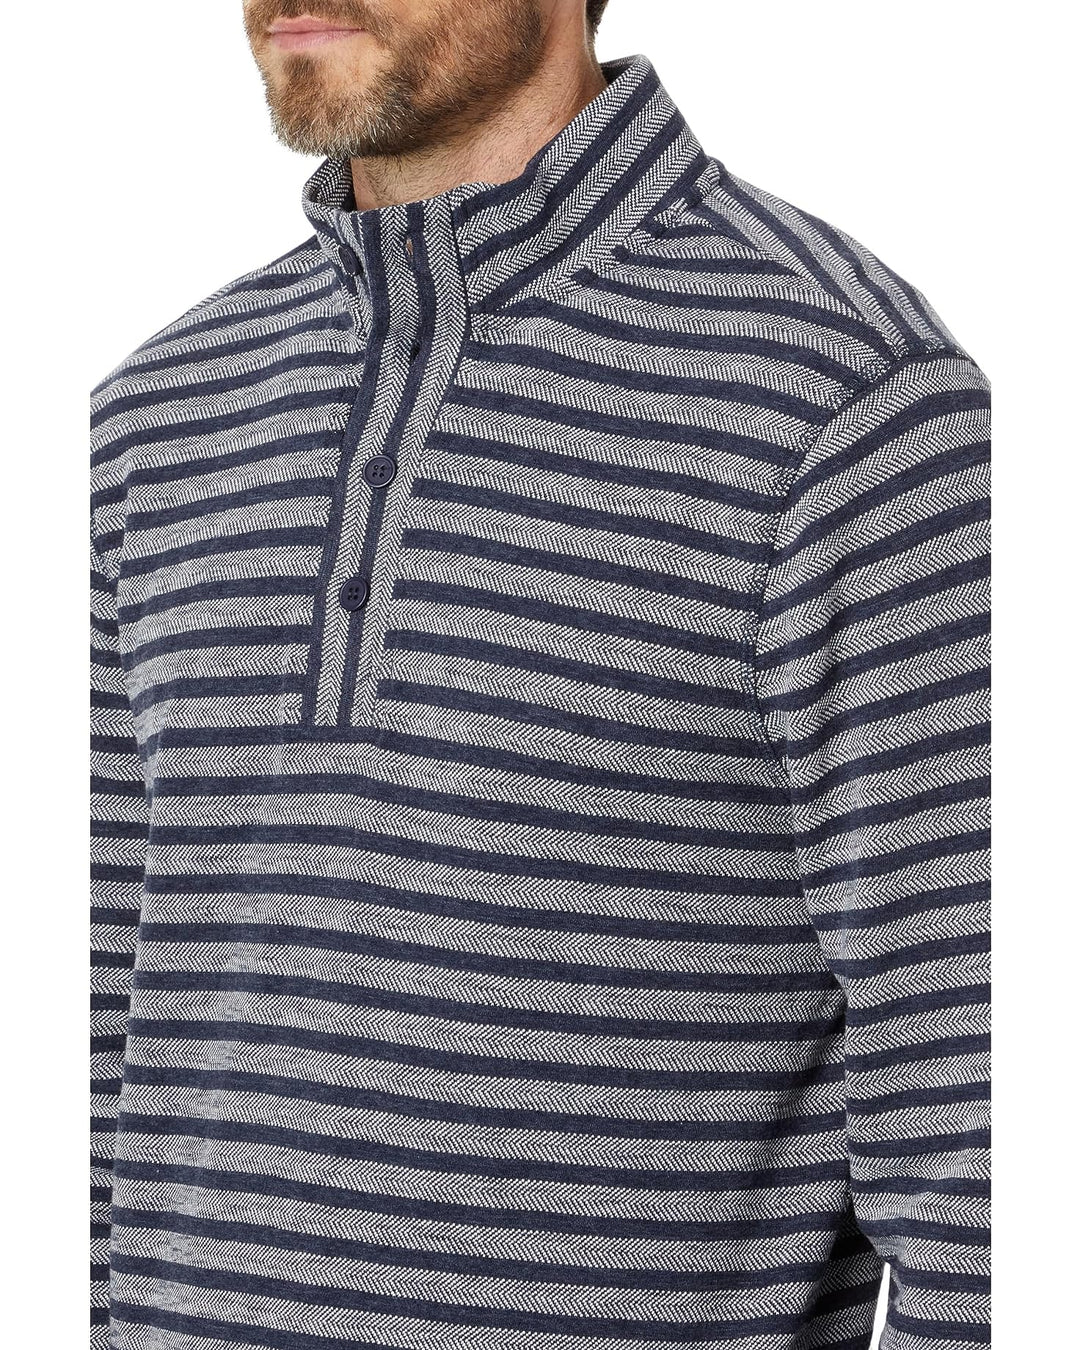 Men's Mock Neck Pullover in Indigo Stripe - Madison's Niche 